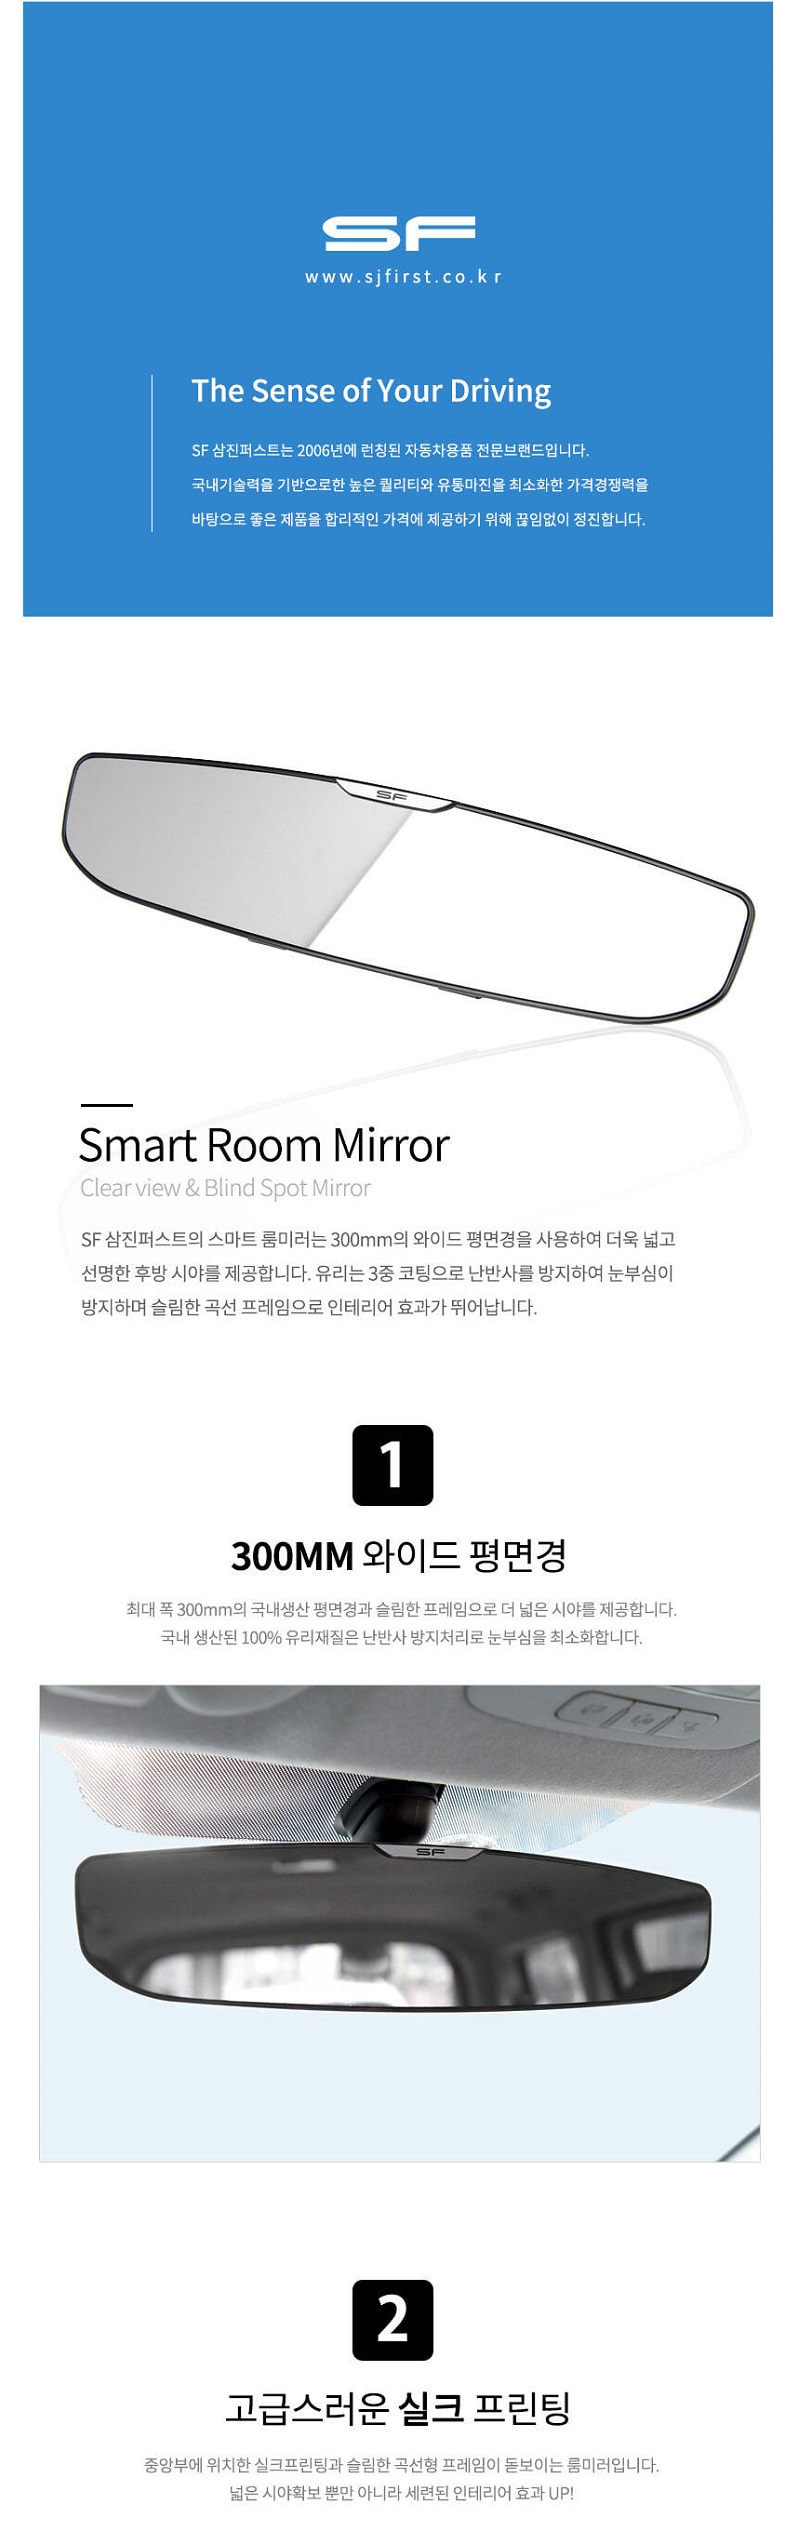 mirror_smart_4130_1.jpg